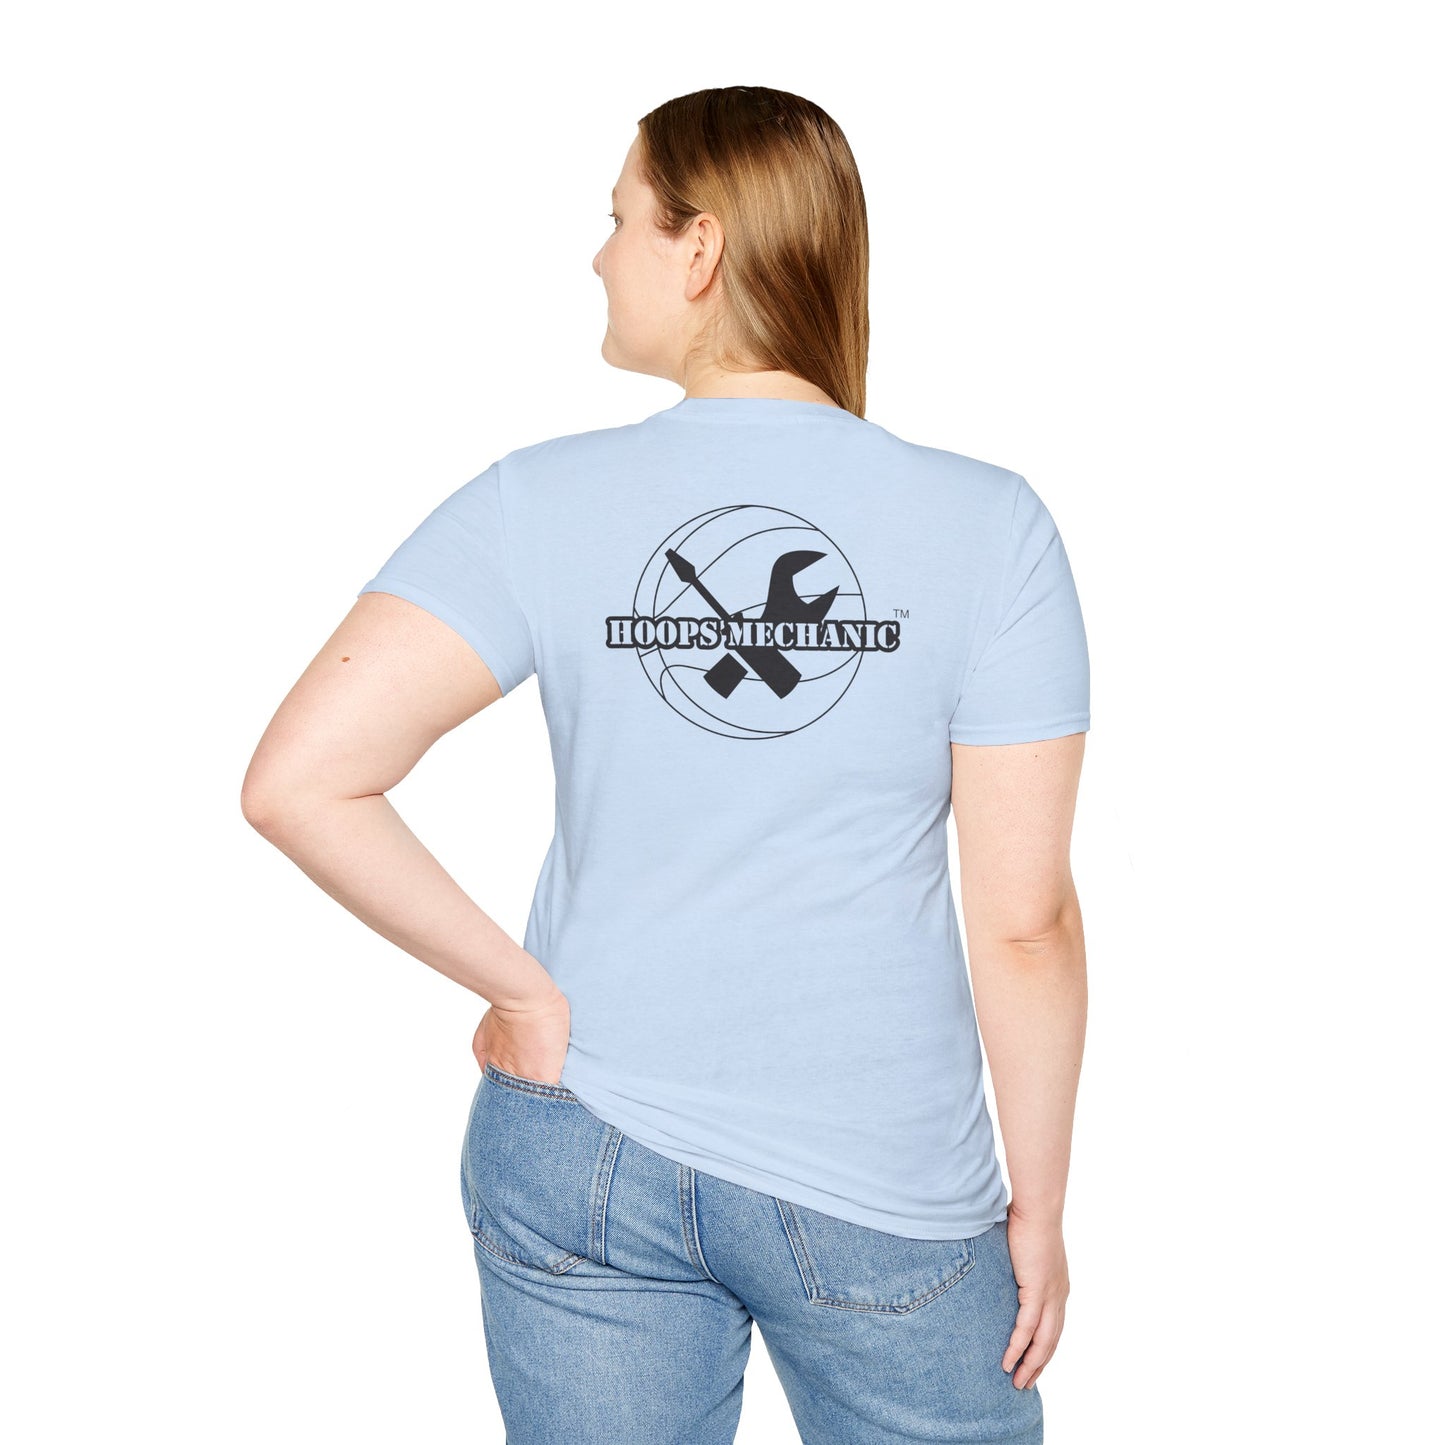 Hoops Mechanic SL Softstyle T-Shirt